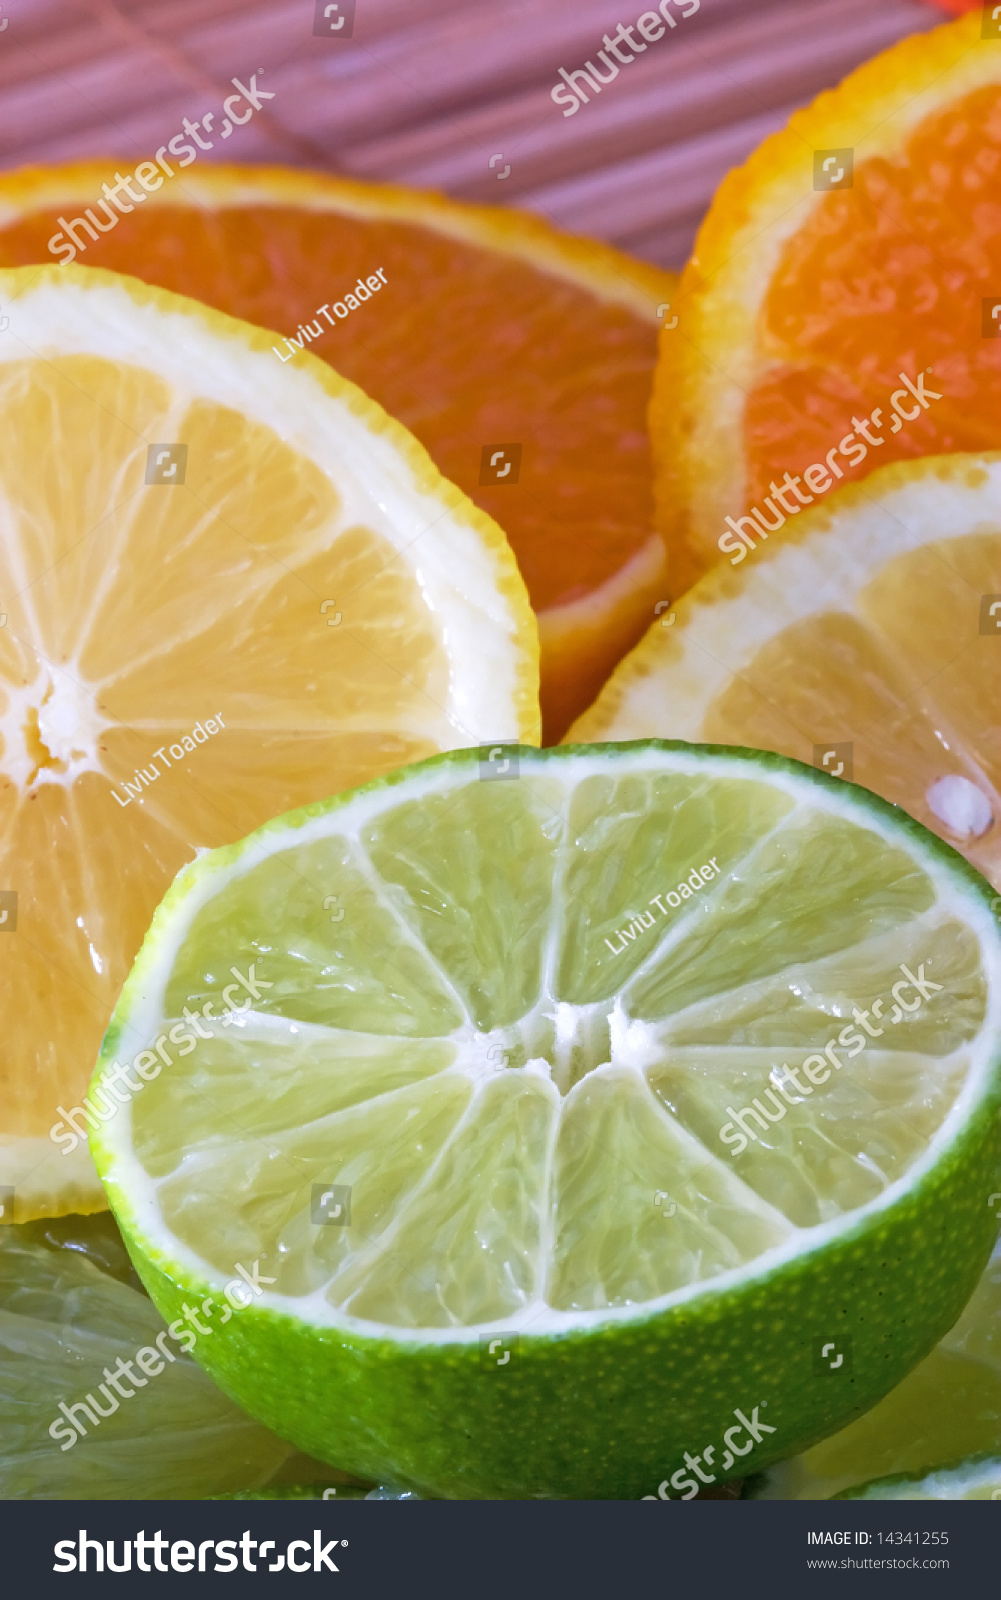 Still Life Oranges Lemons Limes Nature Stock Image